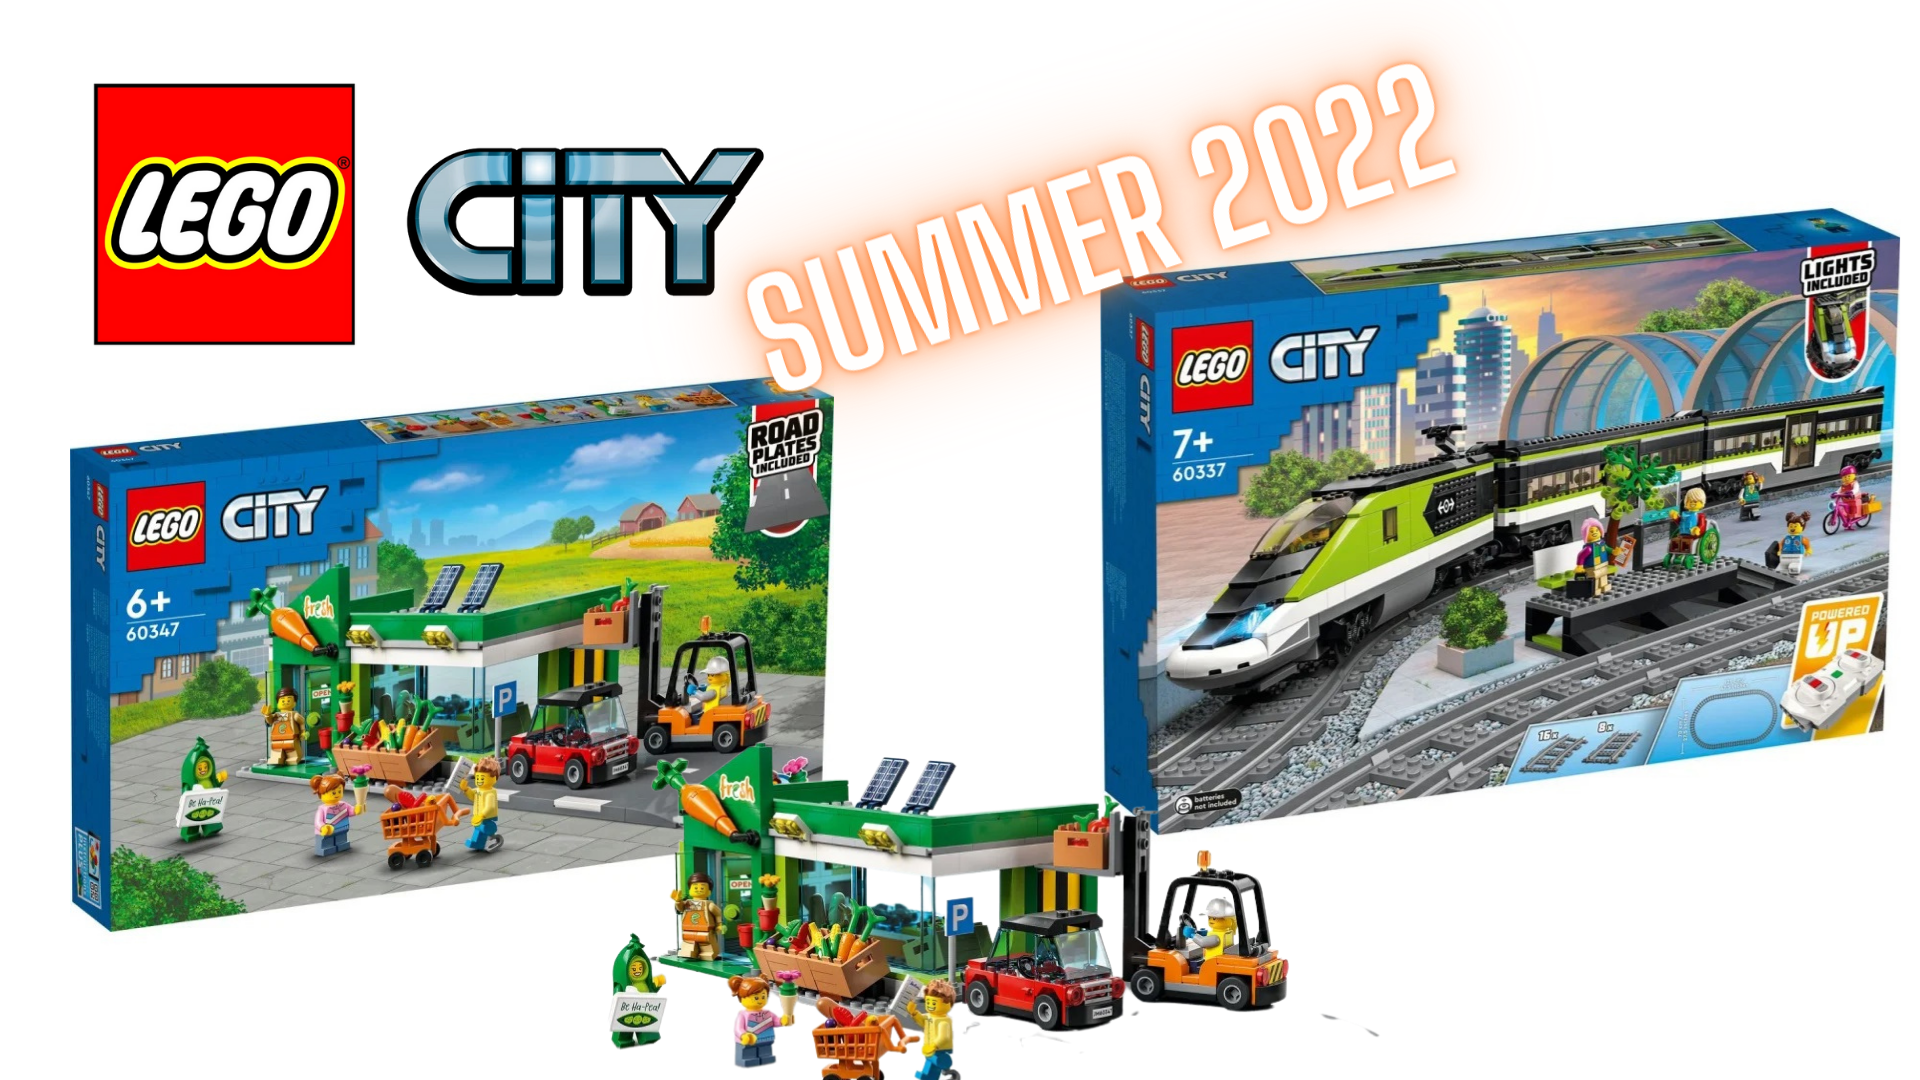 More LEGO City Summer 2022 sets revealed 60337 Passenger Express